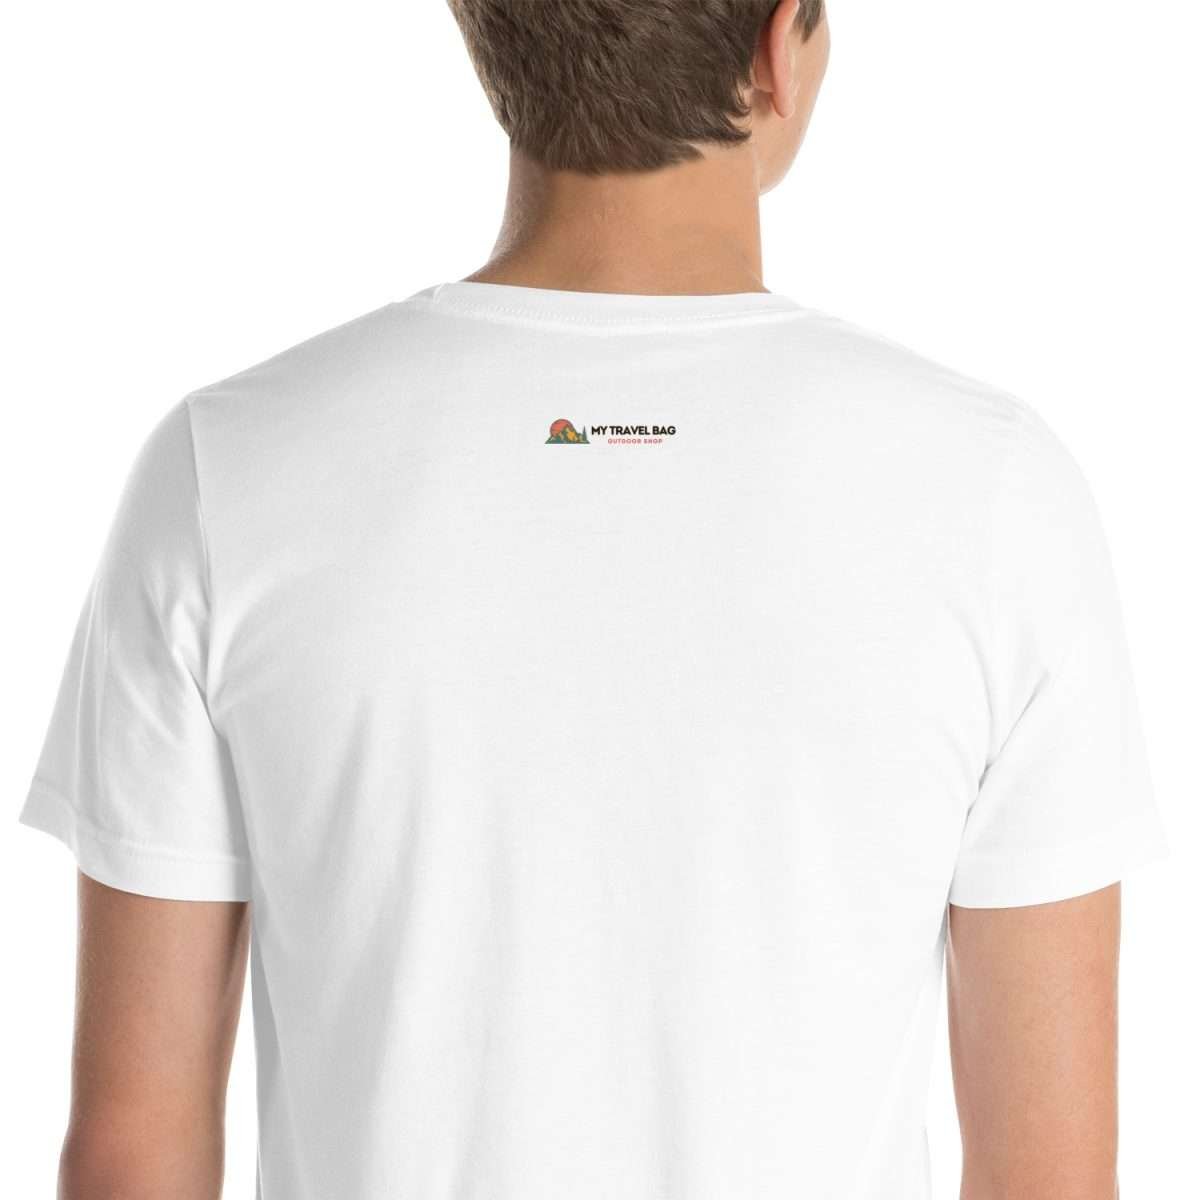 unisex-staple-t-shirt-white-zoomed-in-6318a6b12f5a5.jpg